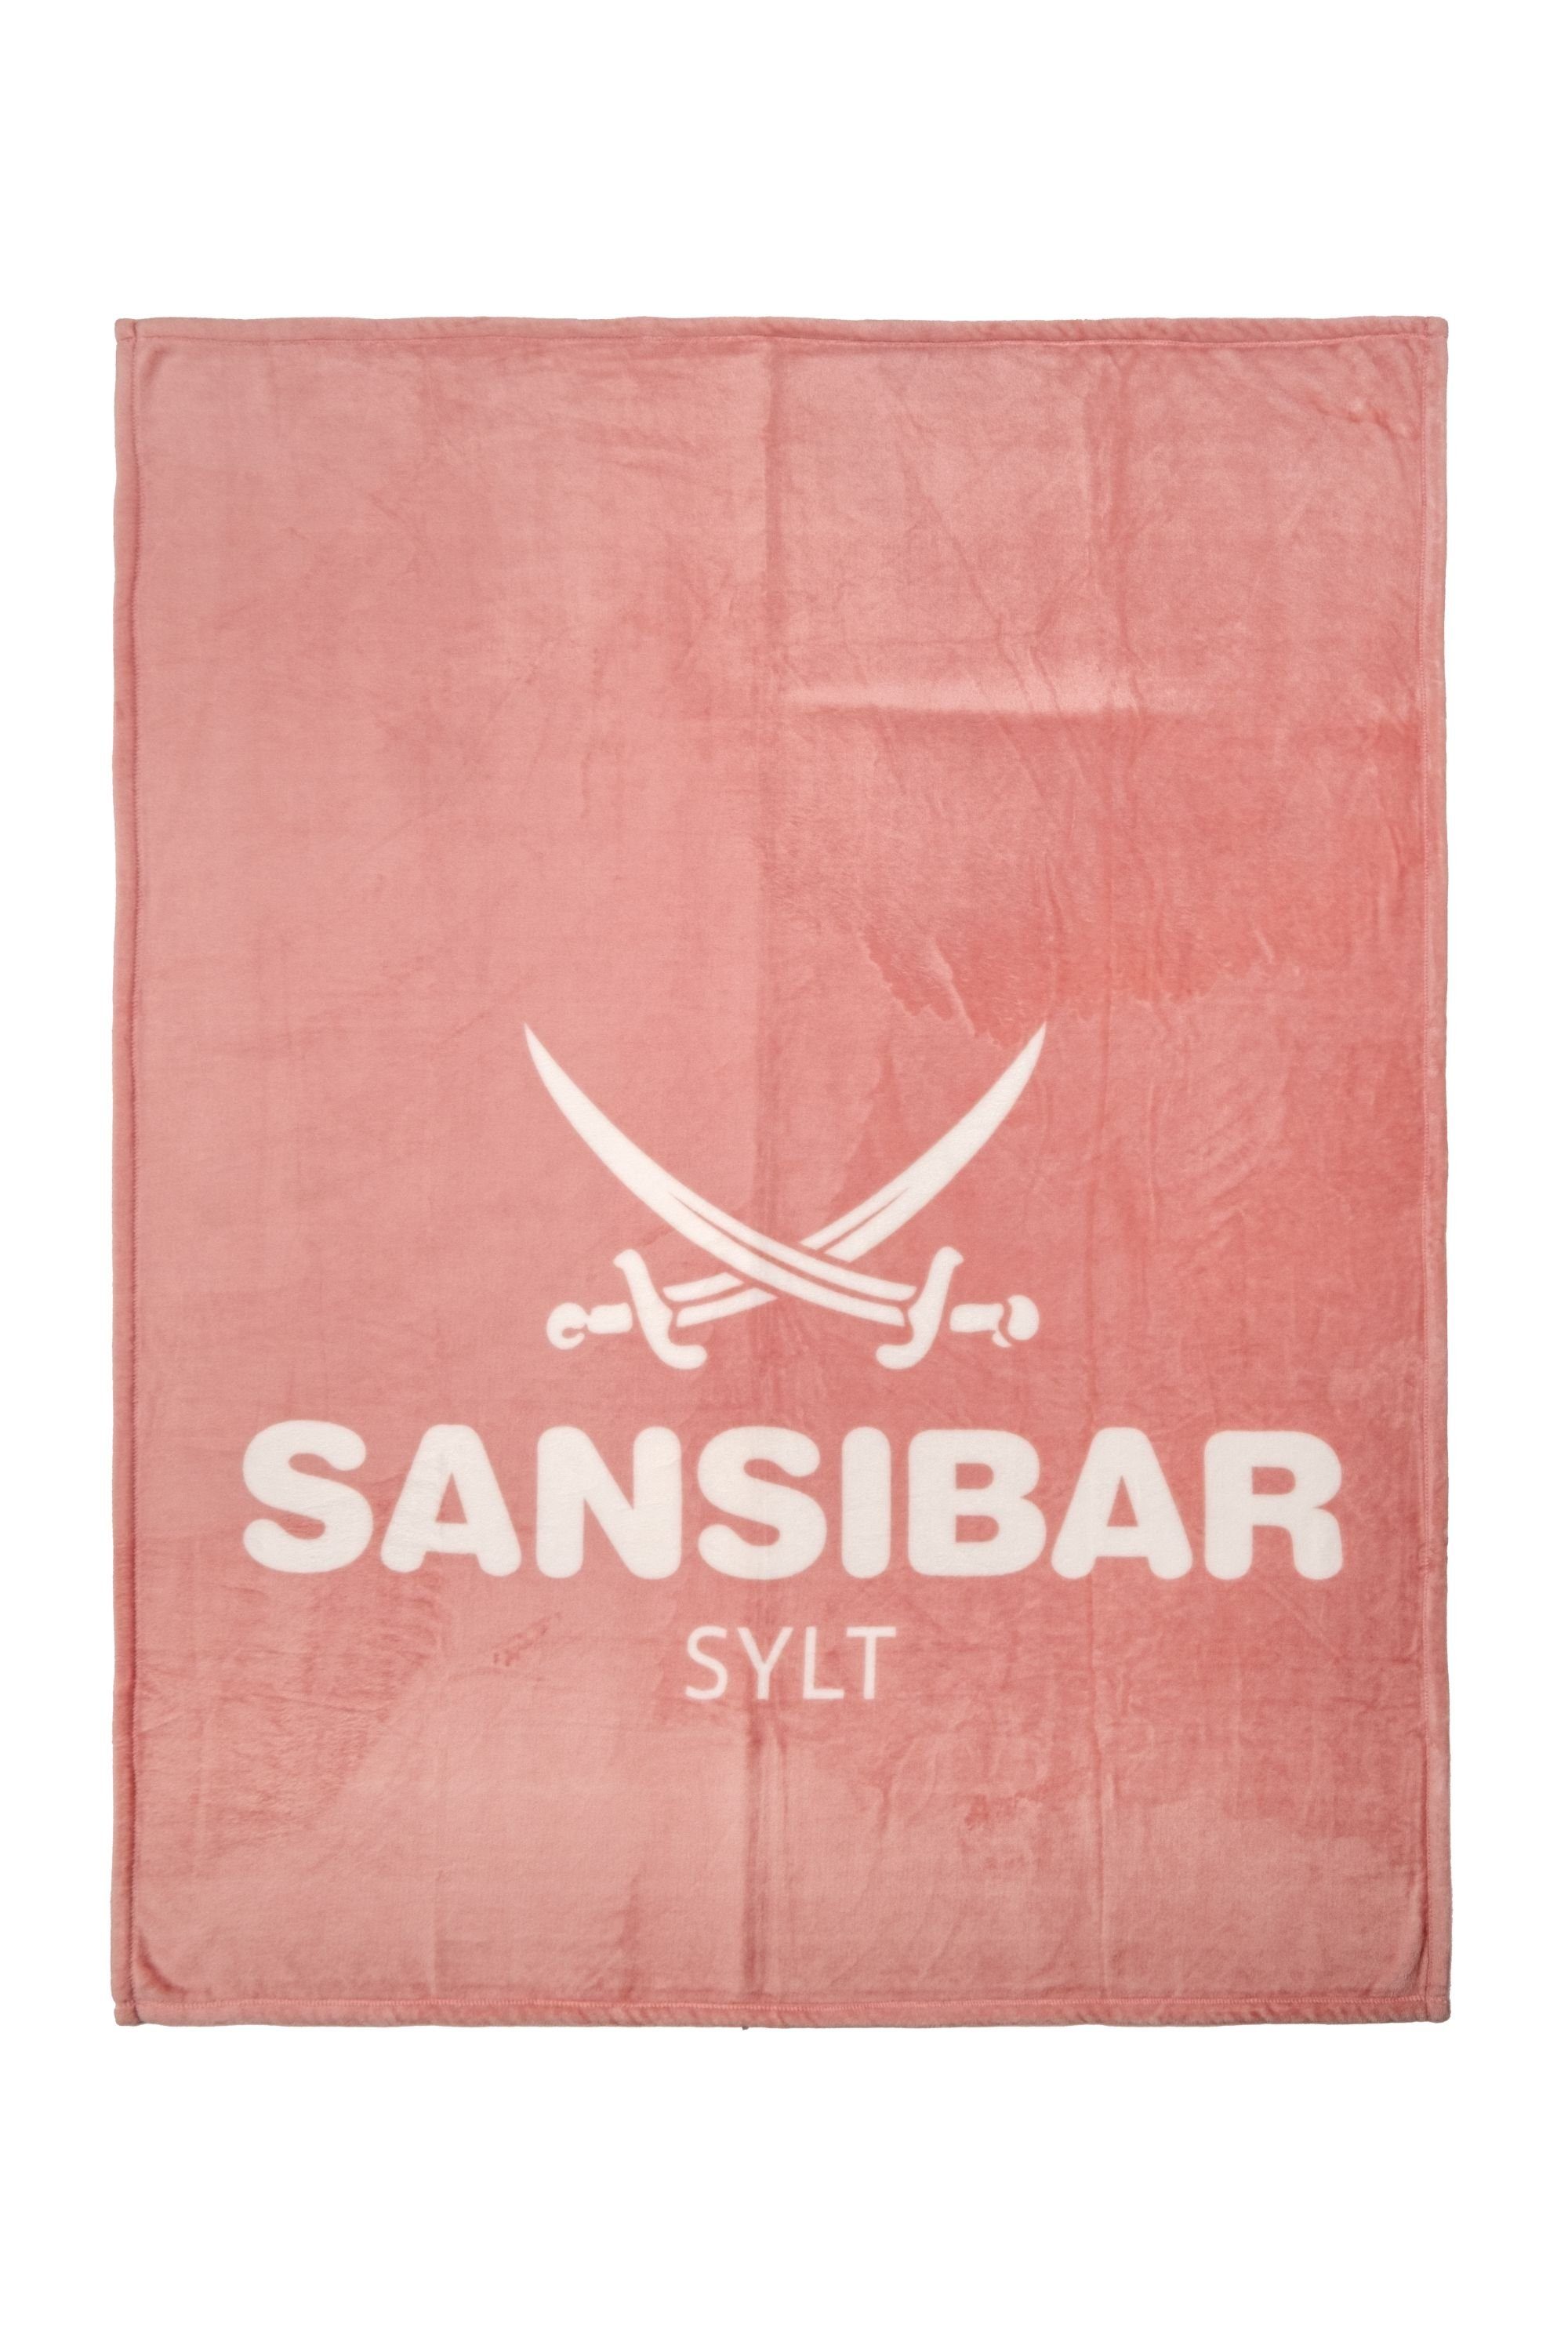 Wohndecke Decke SANSIBAR PINK (BL 140x180 cm) BL 140x180 cm pink Wohndecke, Sansibar Sylt